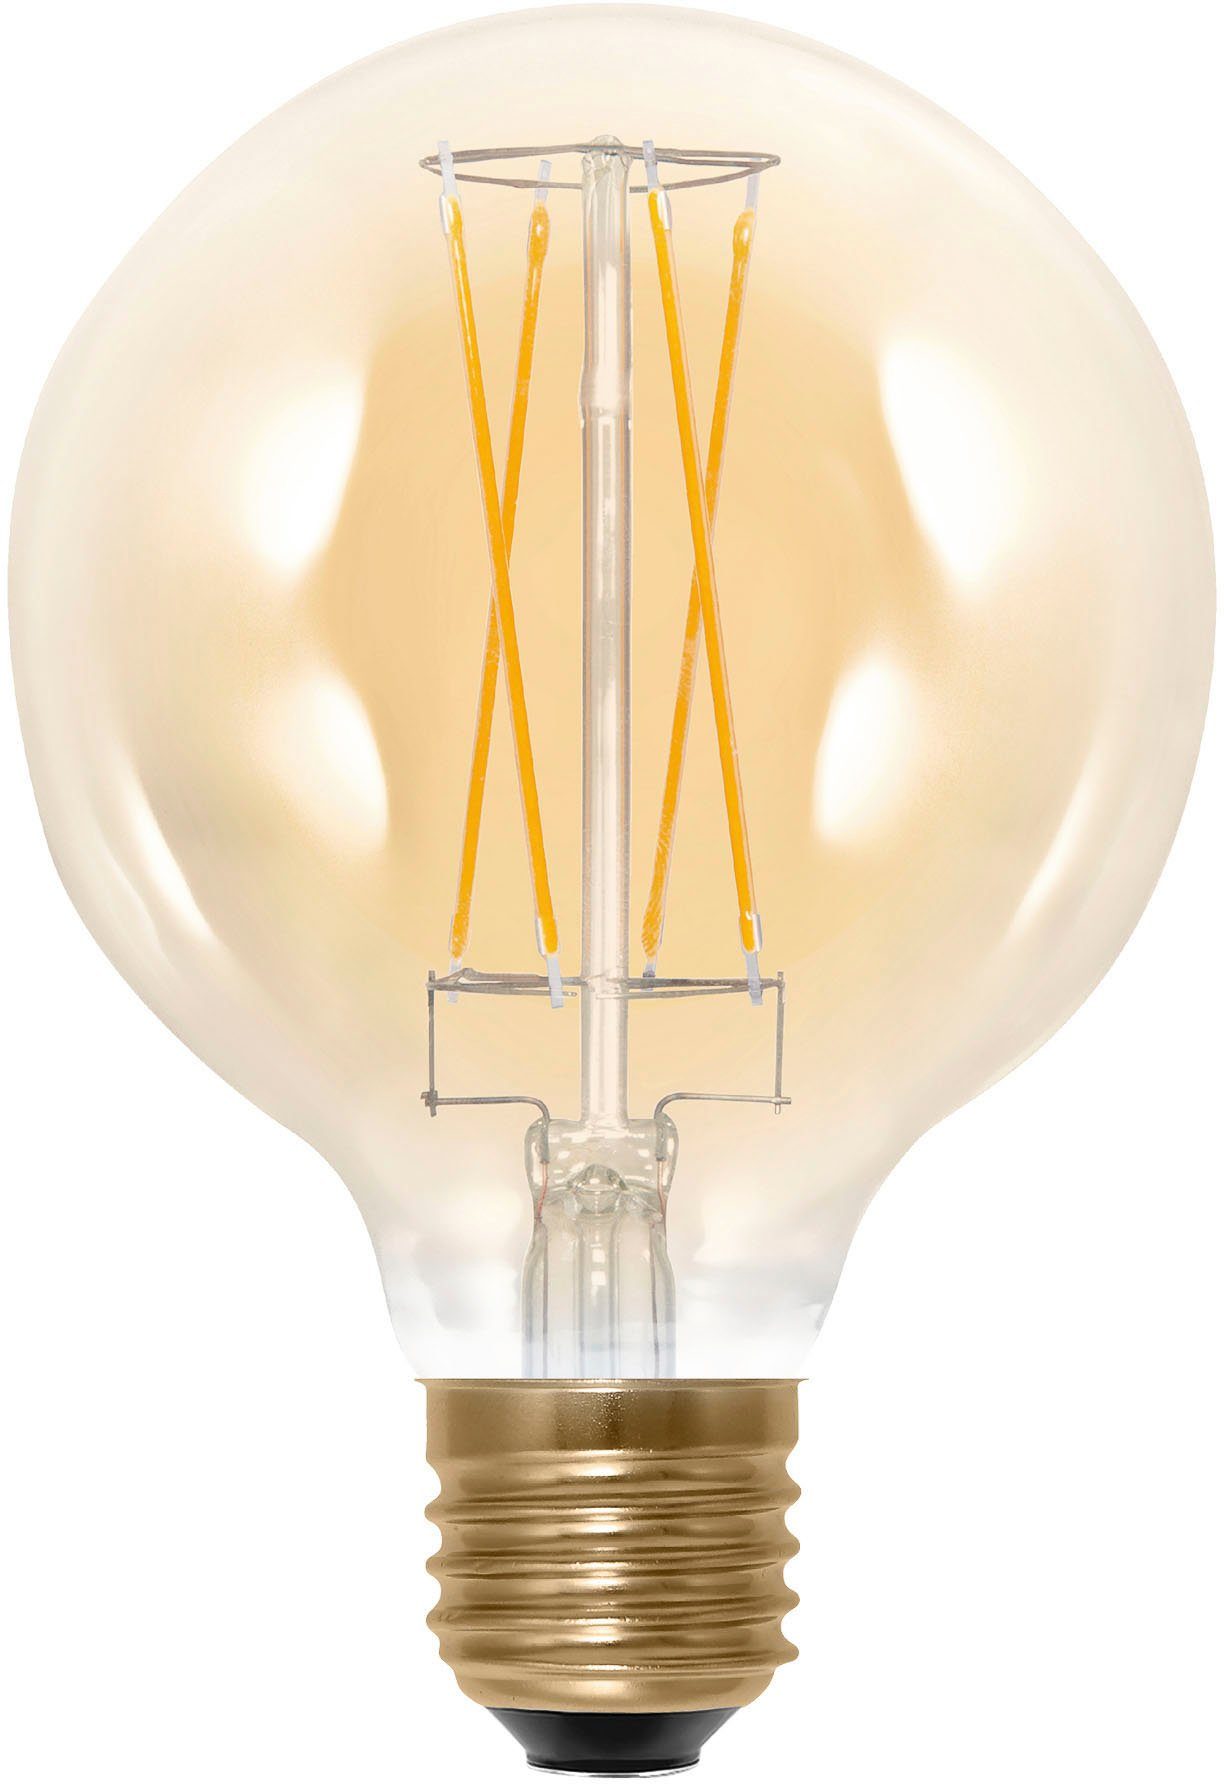 SEGULA LED-Leuchtmittel LED Globe 95 gold, E27, 1 St., Extra-Warmweiß, LED Globe 95 gold, E27, 5W, CRI 90, dimmbar